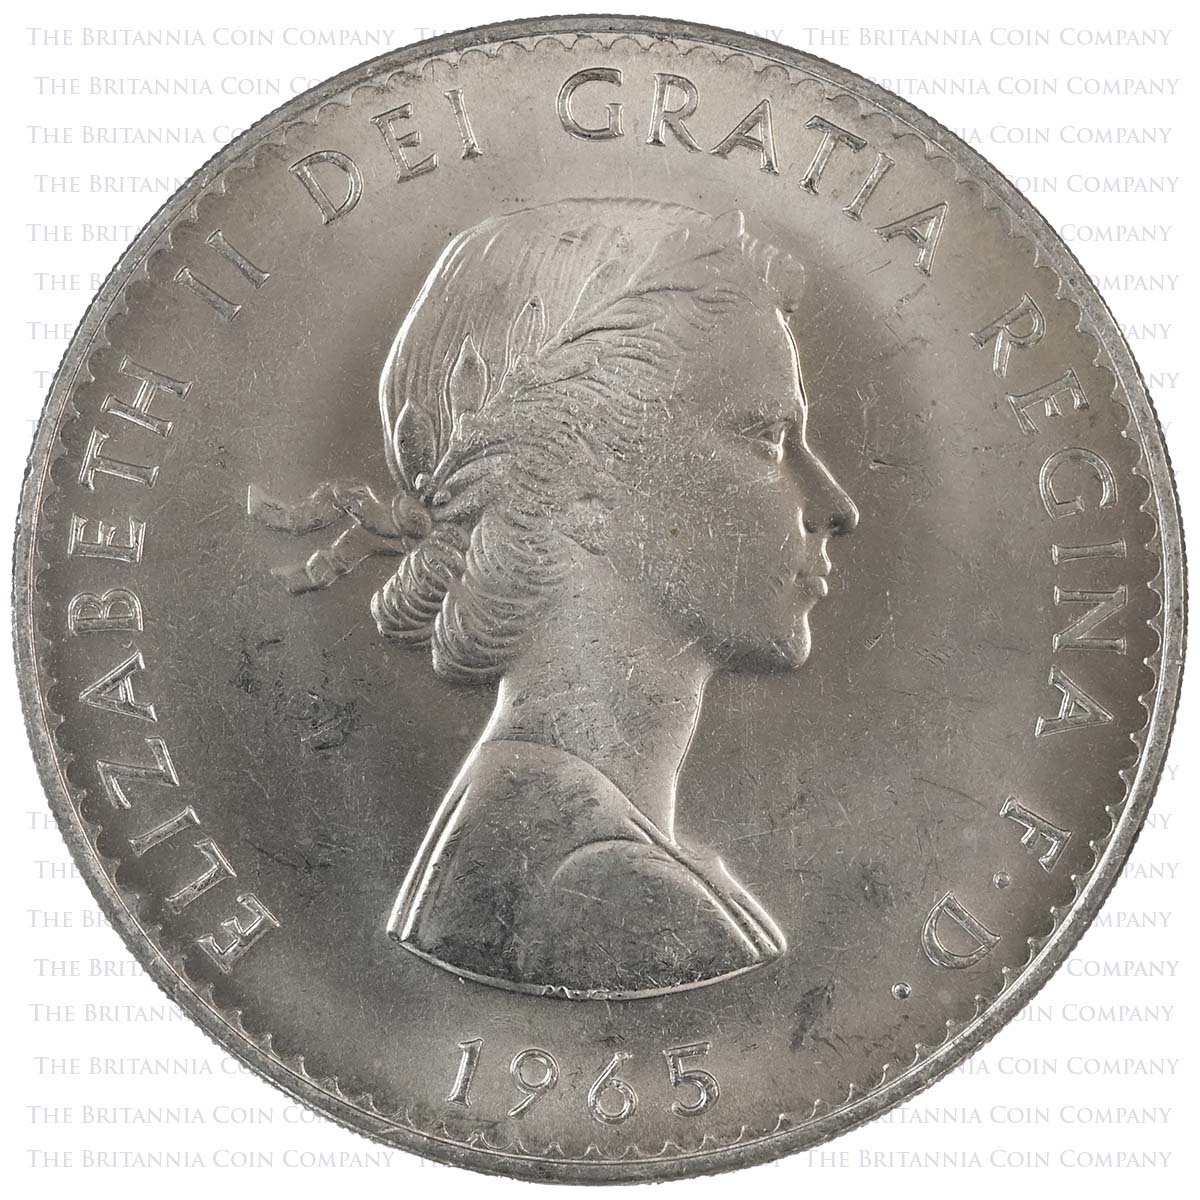 2004 Elizabeth II Gillick Portrait 13 Coin Set 1965 Crown Obverse